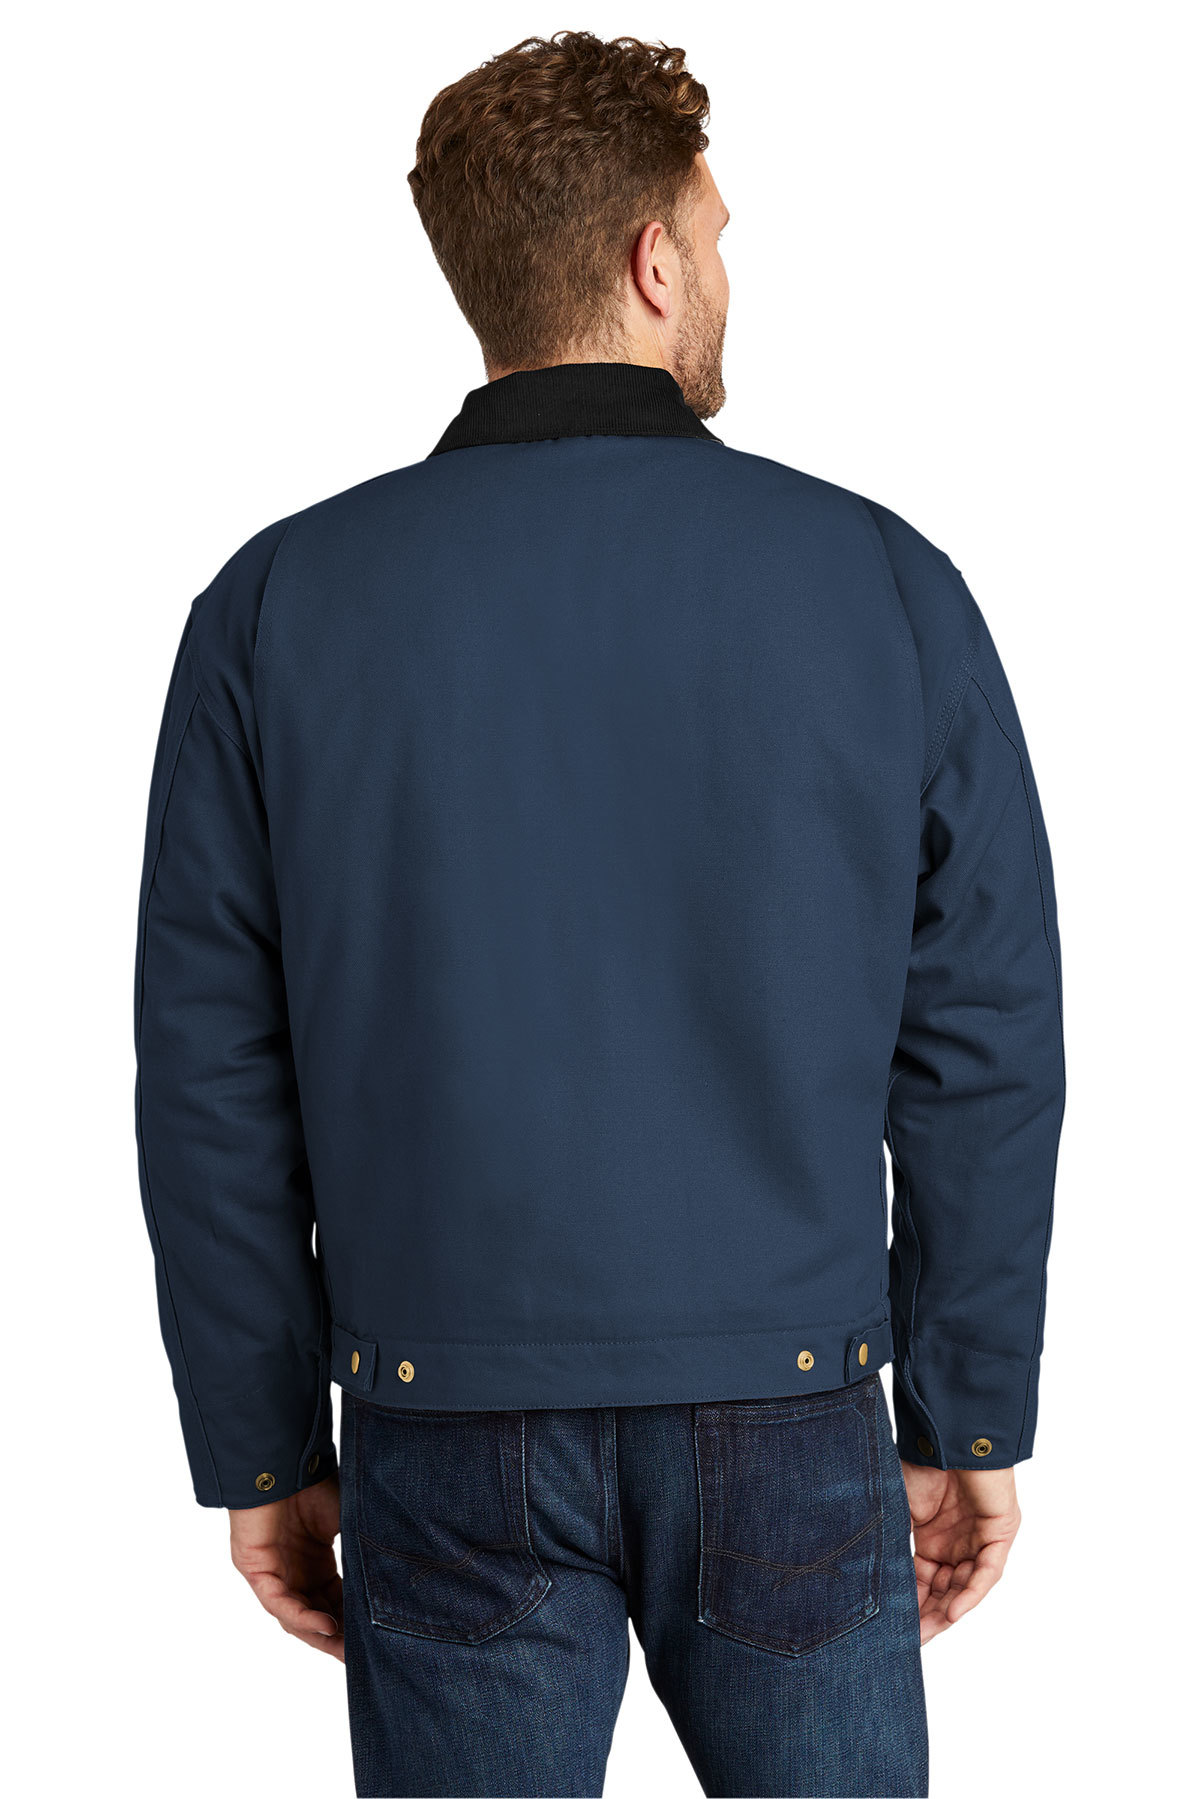 CornerStone - Duck Cloth Work Jacket | Product | CornerStone